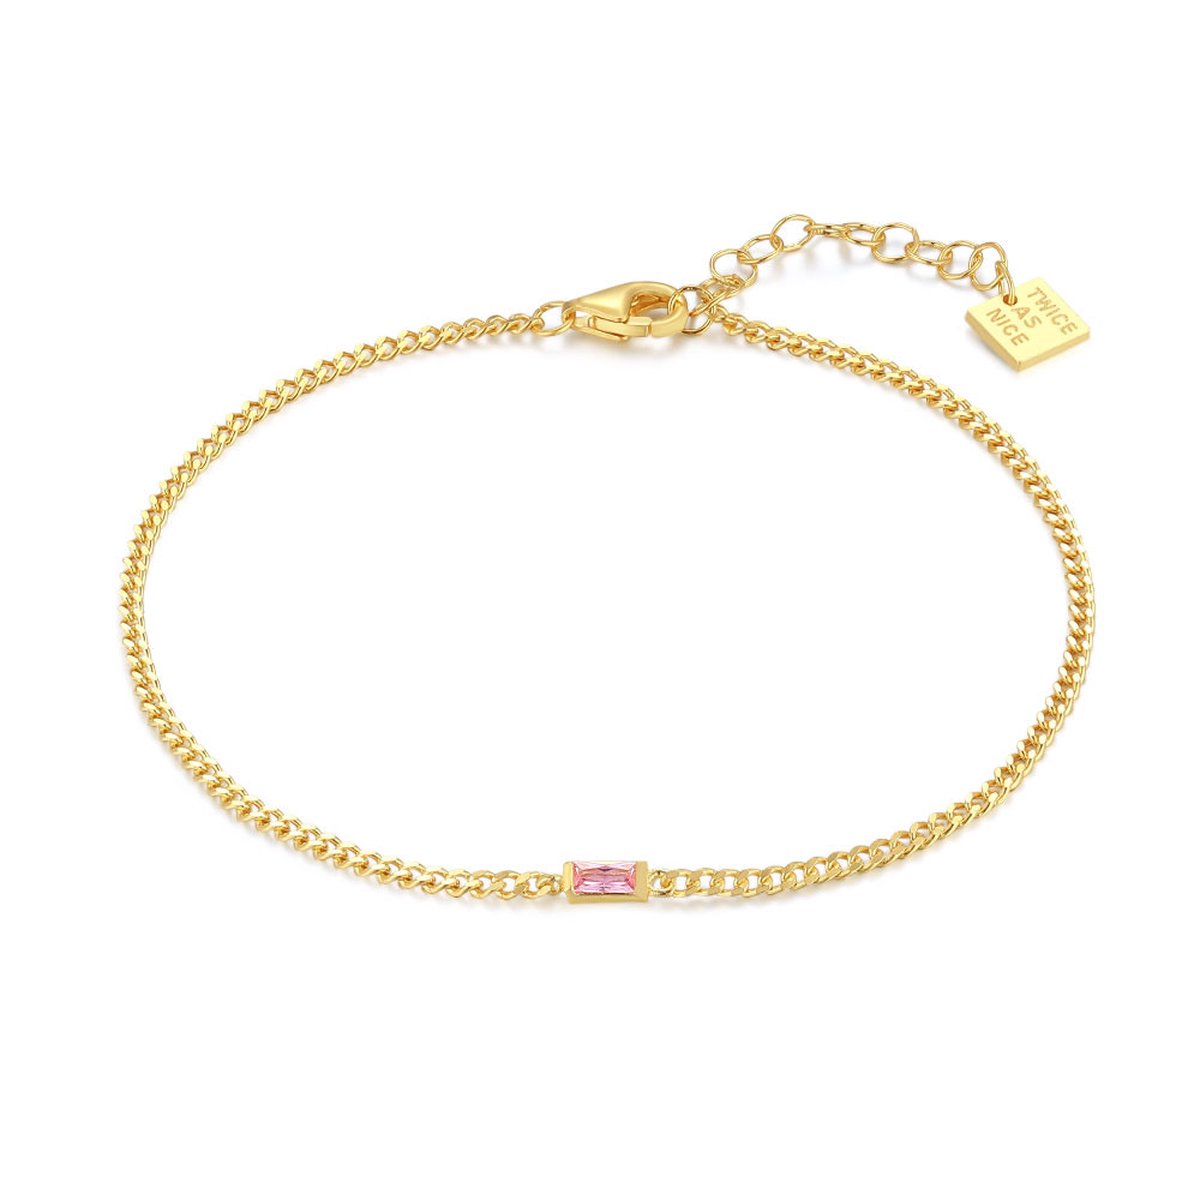 Twice As Nice Armband in zilver, goudkleurig, rechthoekige roze zirkonia 17 cm+3 cm